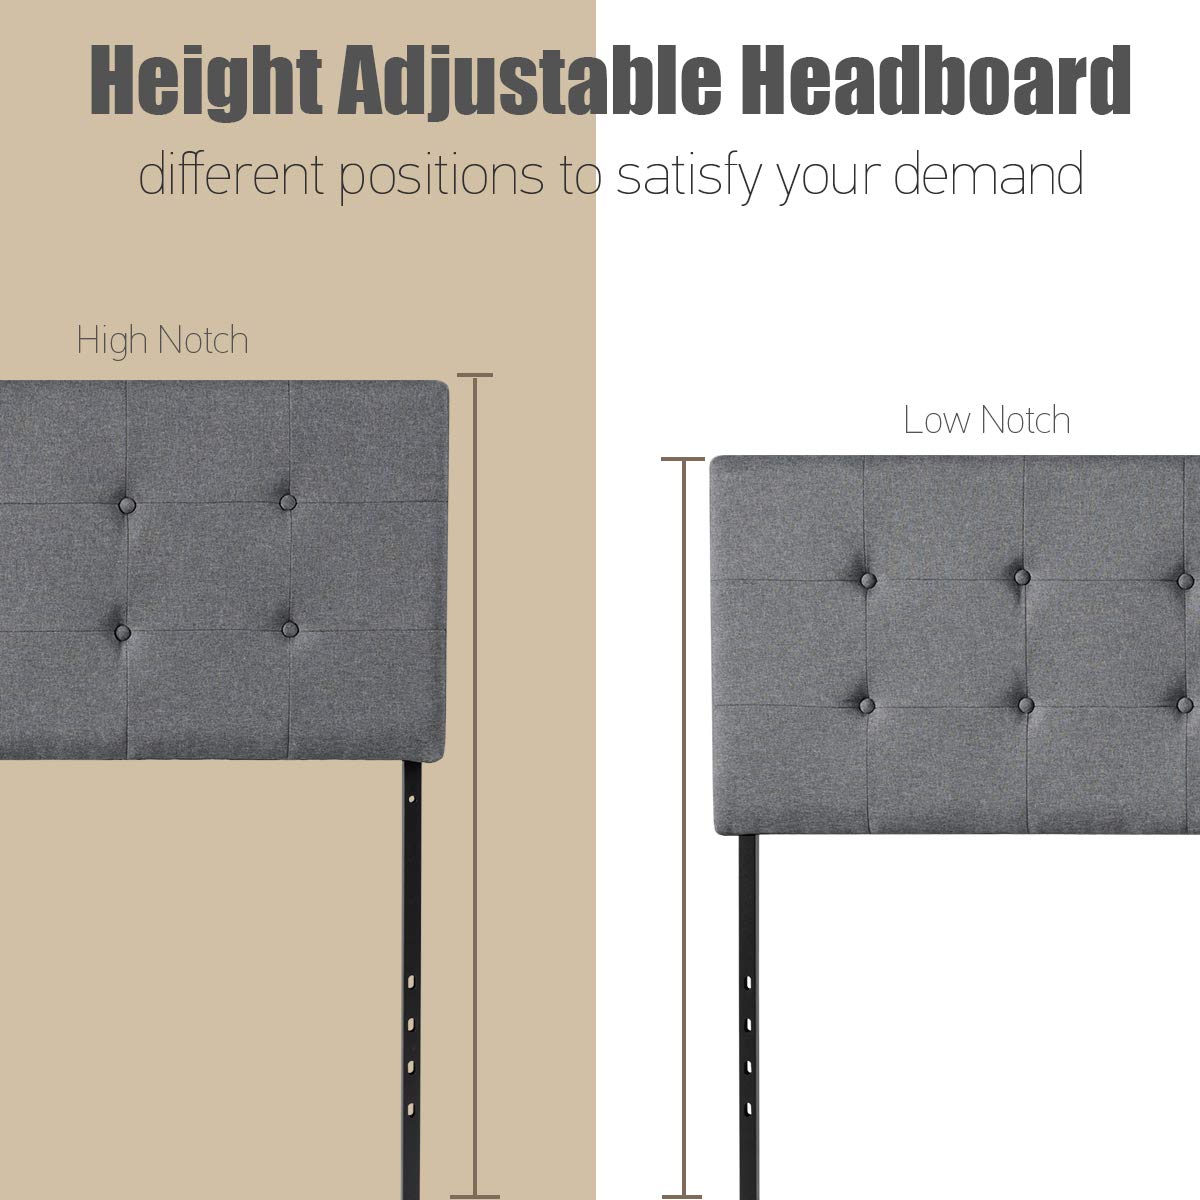 Giantex Modern Upholstered Headboard, Grey